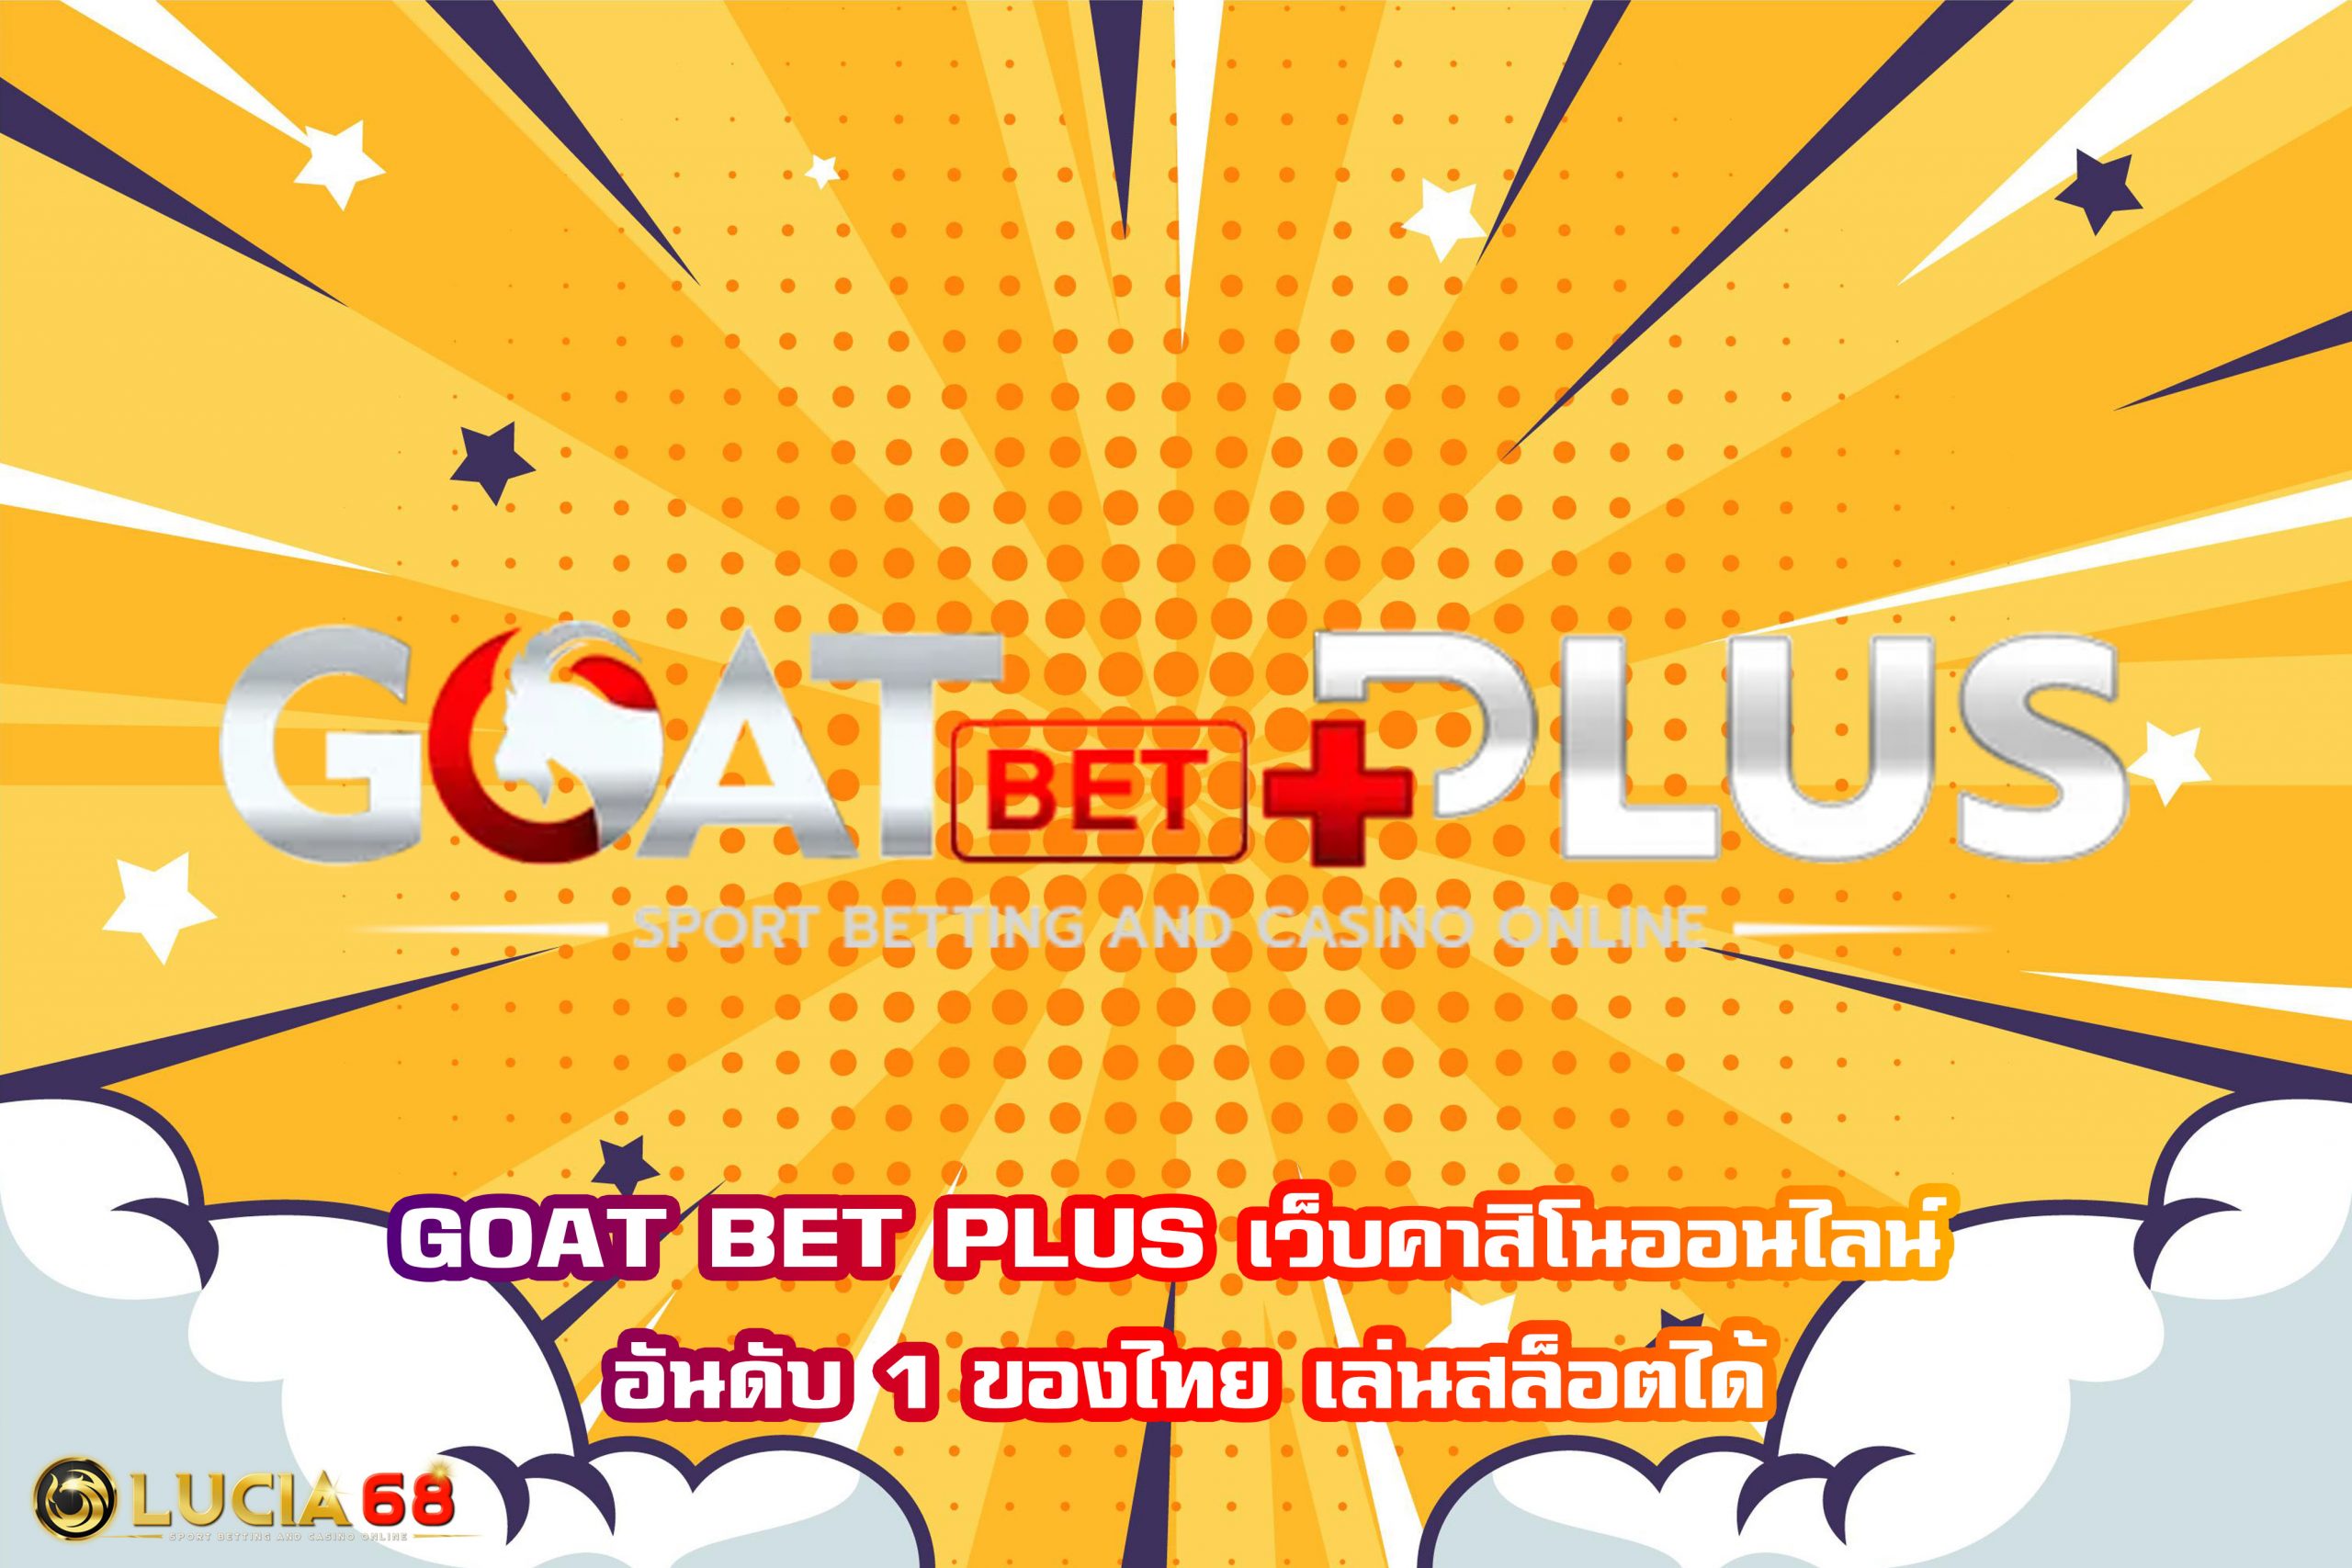 GOAT BET PLUS เว็บคาสิโนออนไลน์ อันดับ 1 ของไทย เล่นสล็อตได้